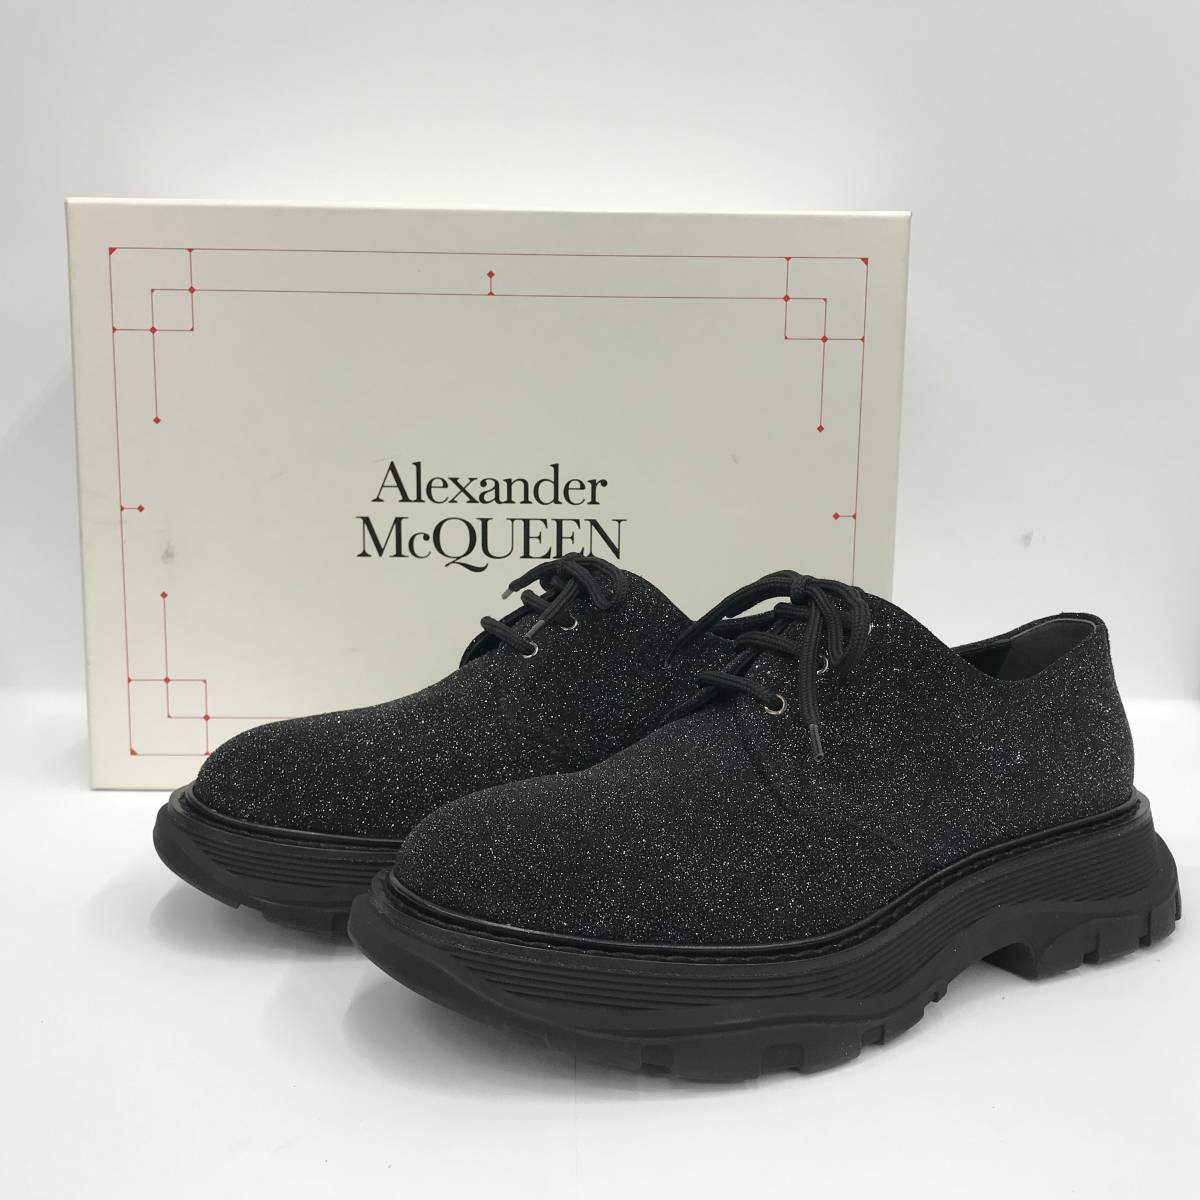 Alexander McQUEEN アレクサンダー マックイーン スニーカー ラメ ブラック 604255 EU42 サイズ26.5cm 店舗受取可